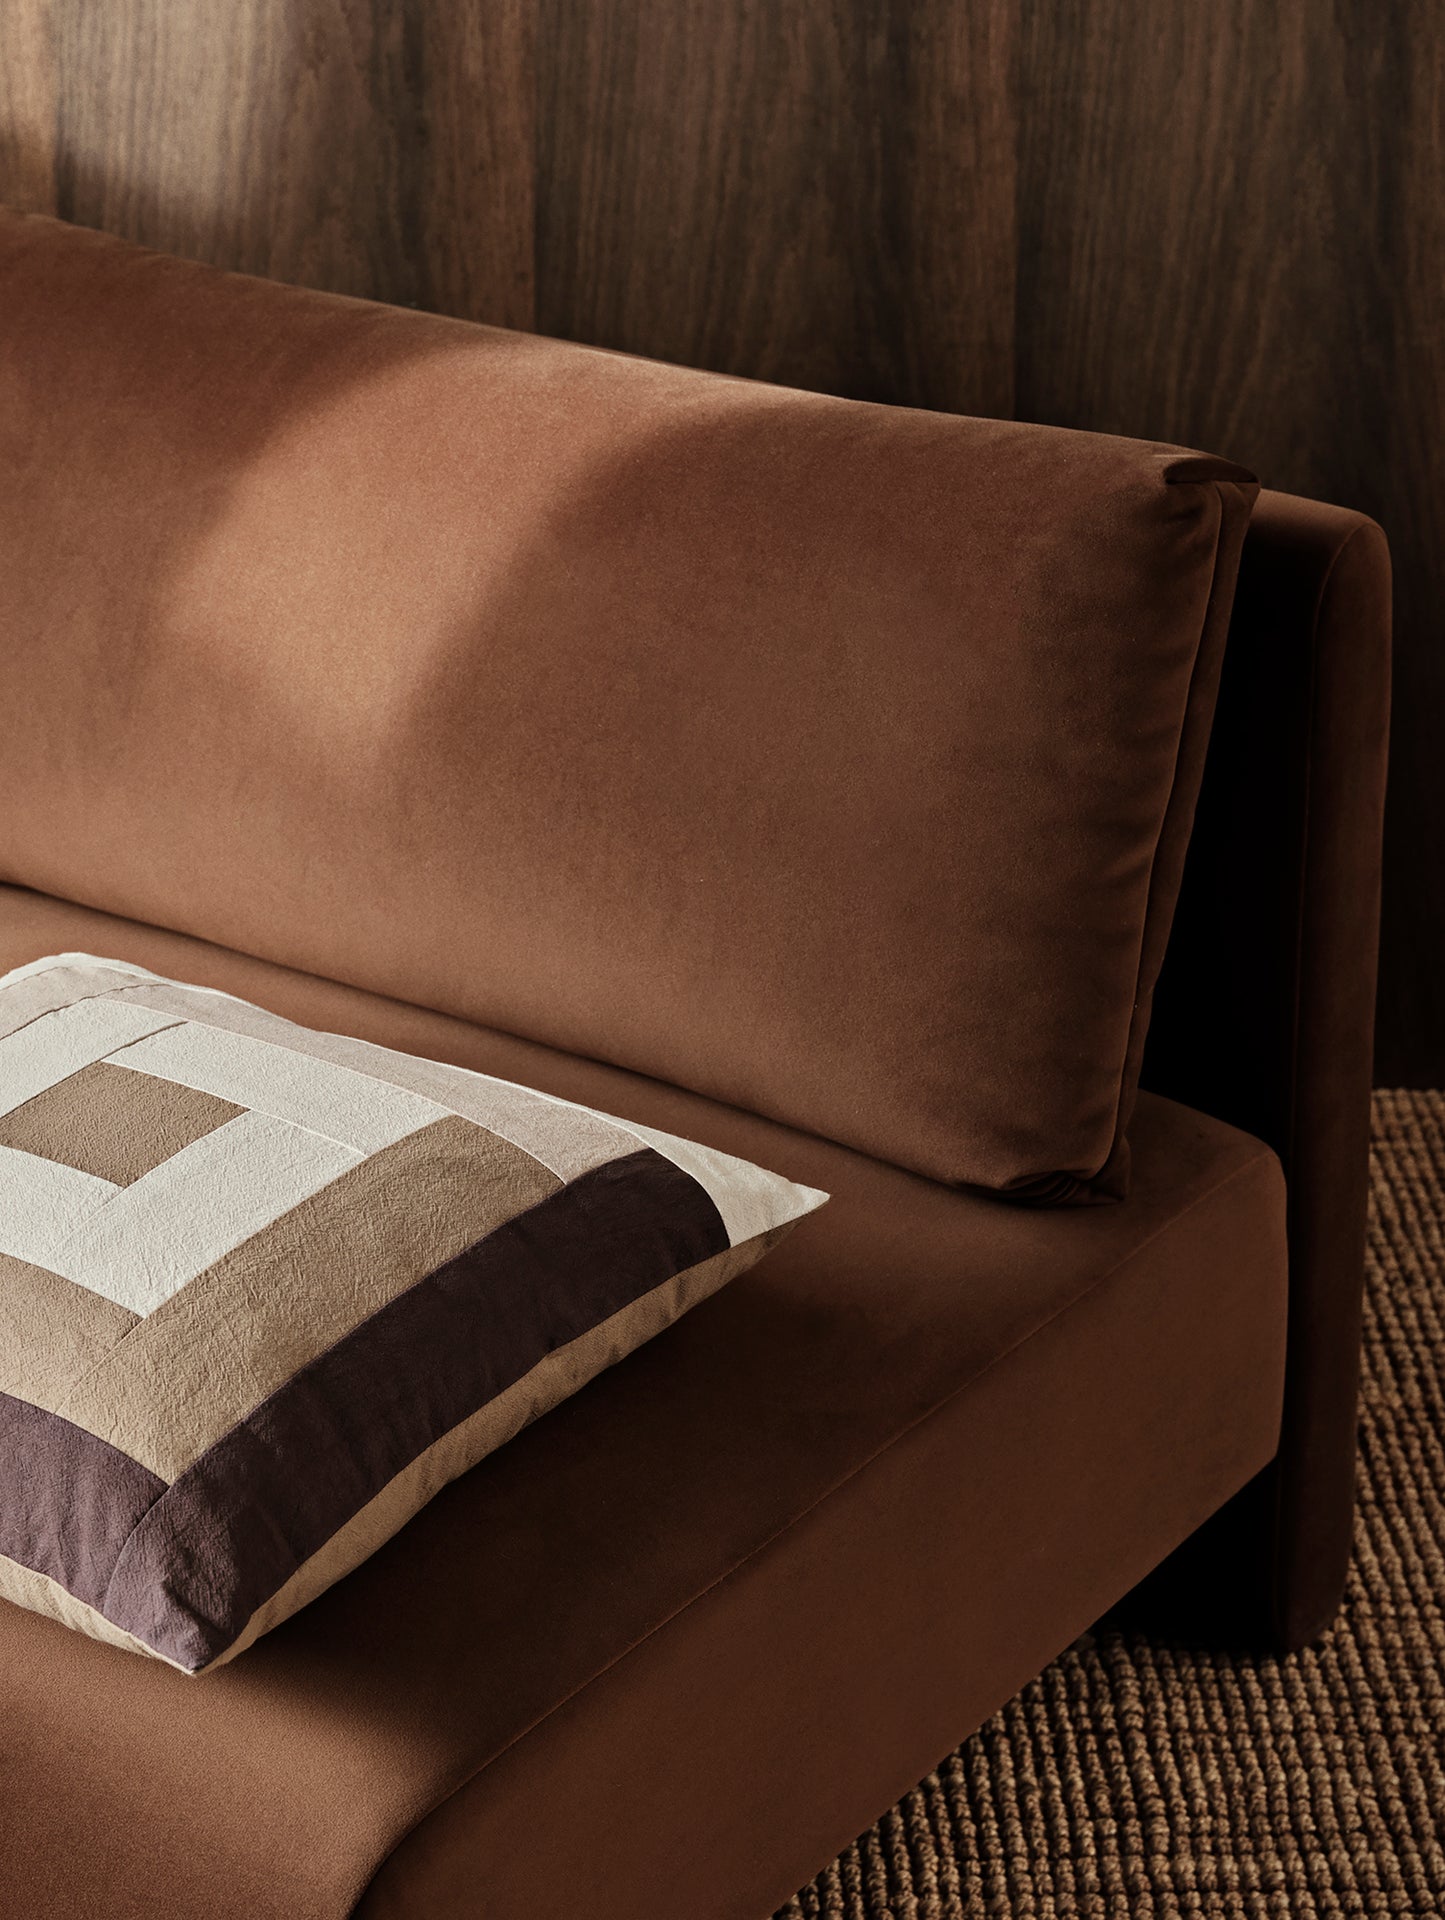 Dase 2-Seater Modular Sofa by Ferm Living - Rich Velvet Soft Brown